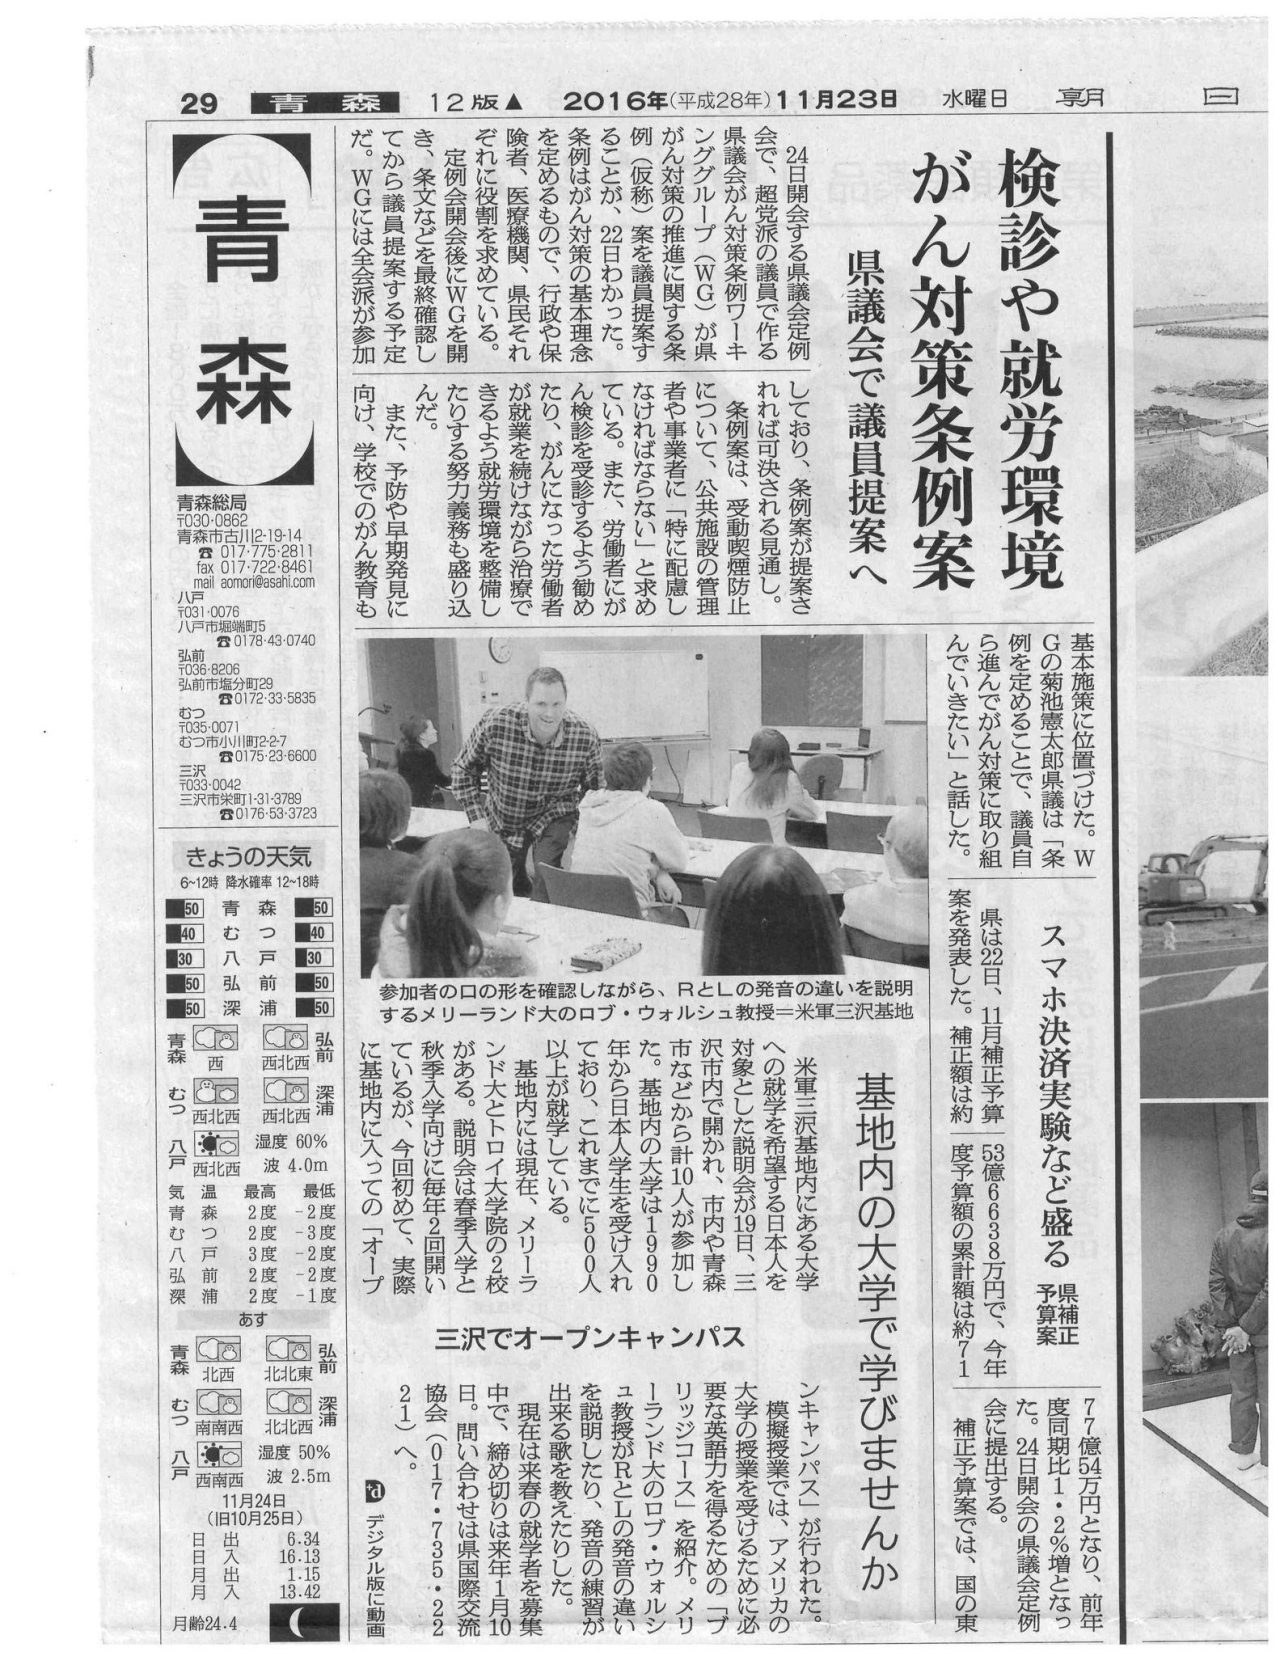 An Amori, Japan, newspaper ad shows UMGC faculty member Robert Walsh at an open house for Bridge Program applicants.